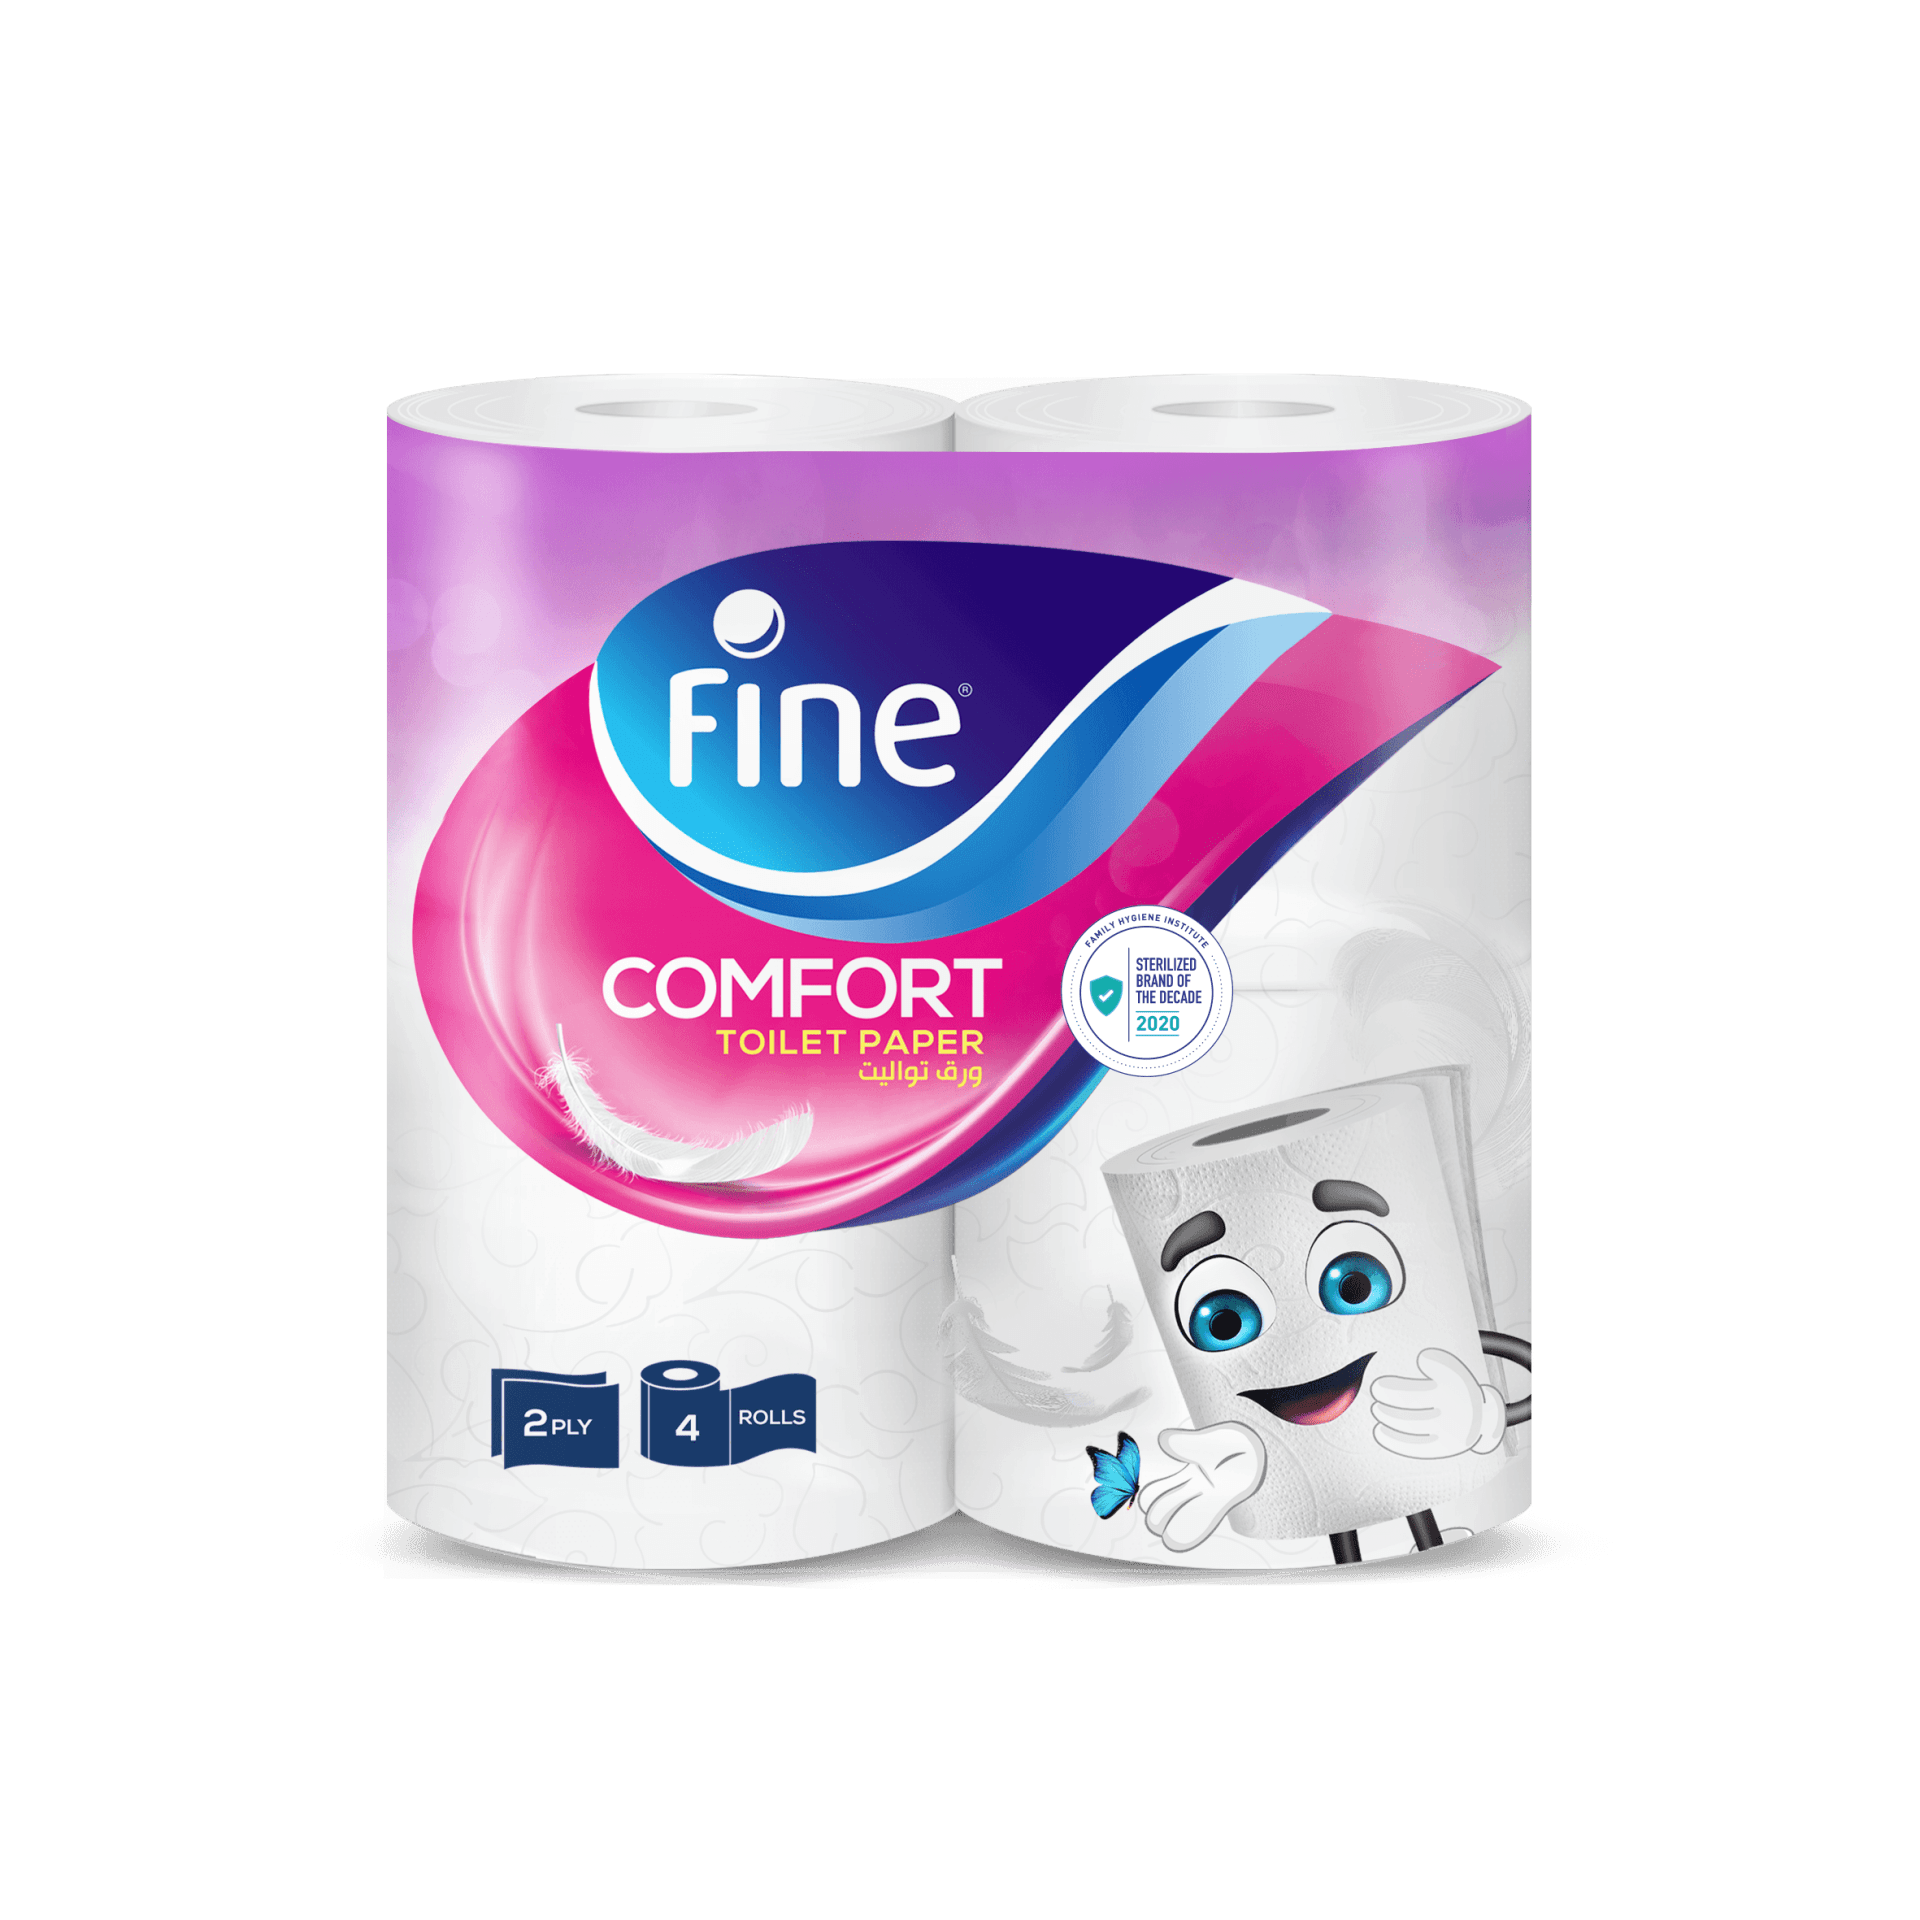 Fine Comfort Toilet Roll Image